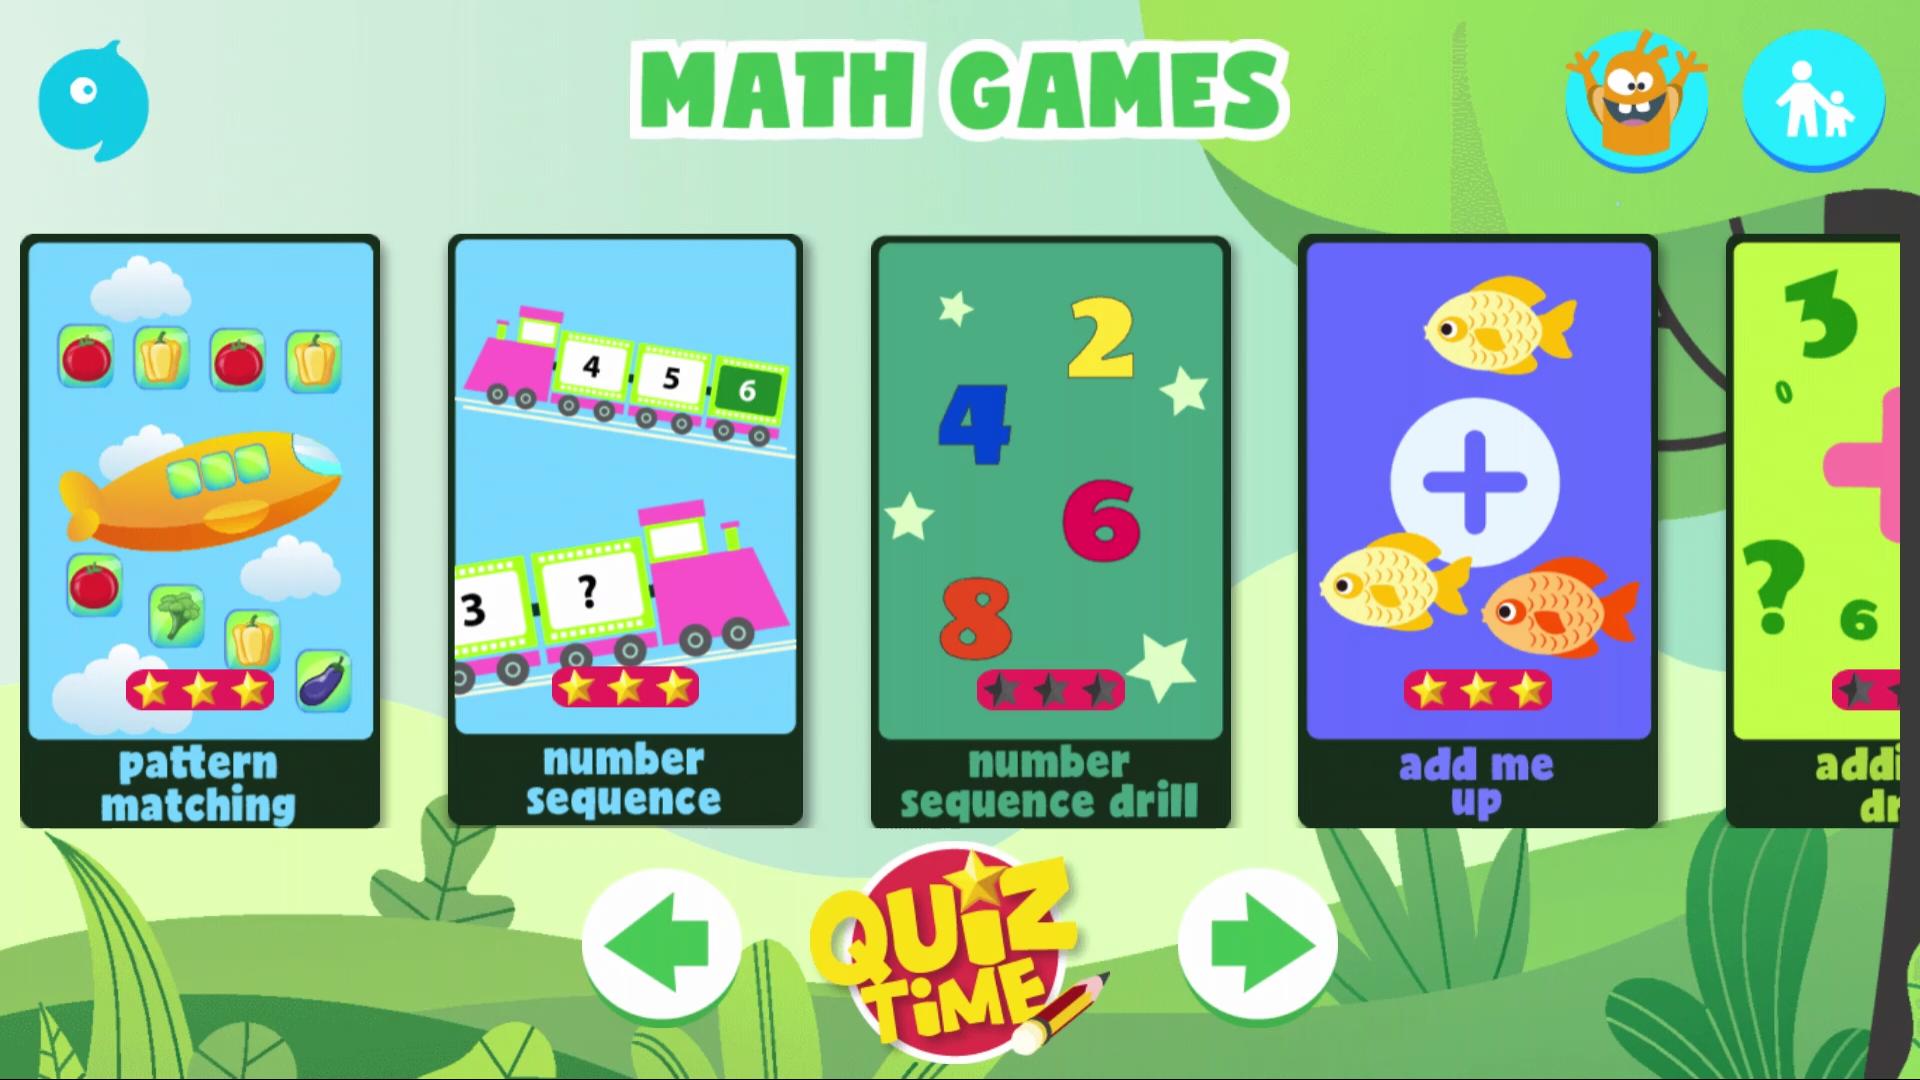 Kids Fun Learning - Educational Cool Math Games 1.0.2.0 Screenshot 17